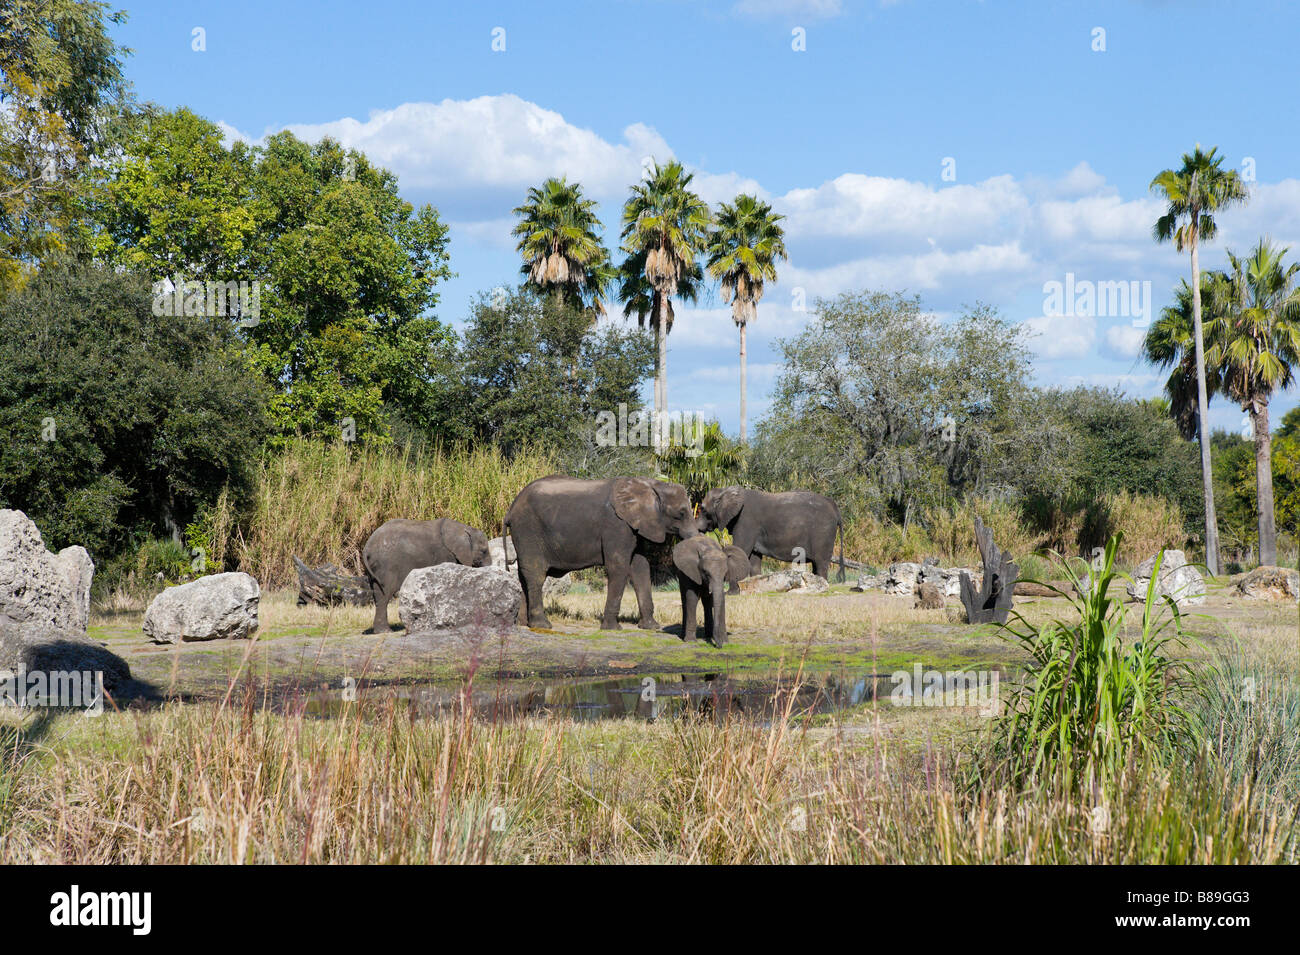 Elephants on the Kilimanjaro Safari, Animal Kingdom, Walt Disney World Resort, Orlando, Florida Stock Photo